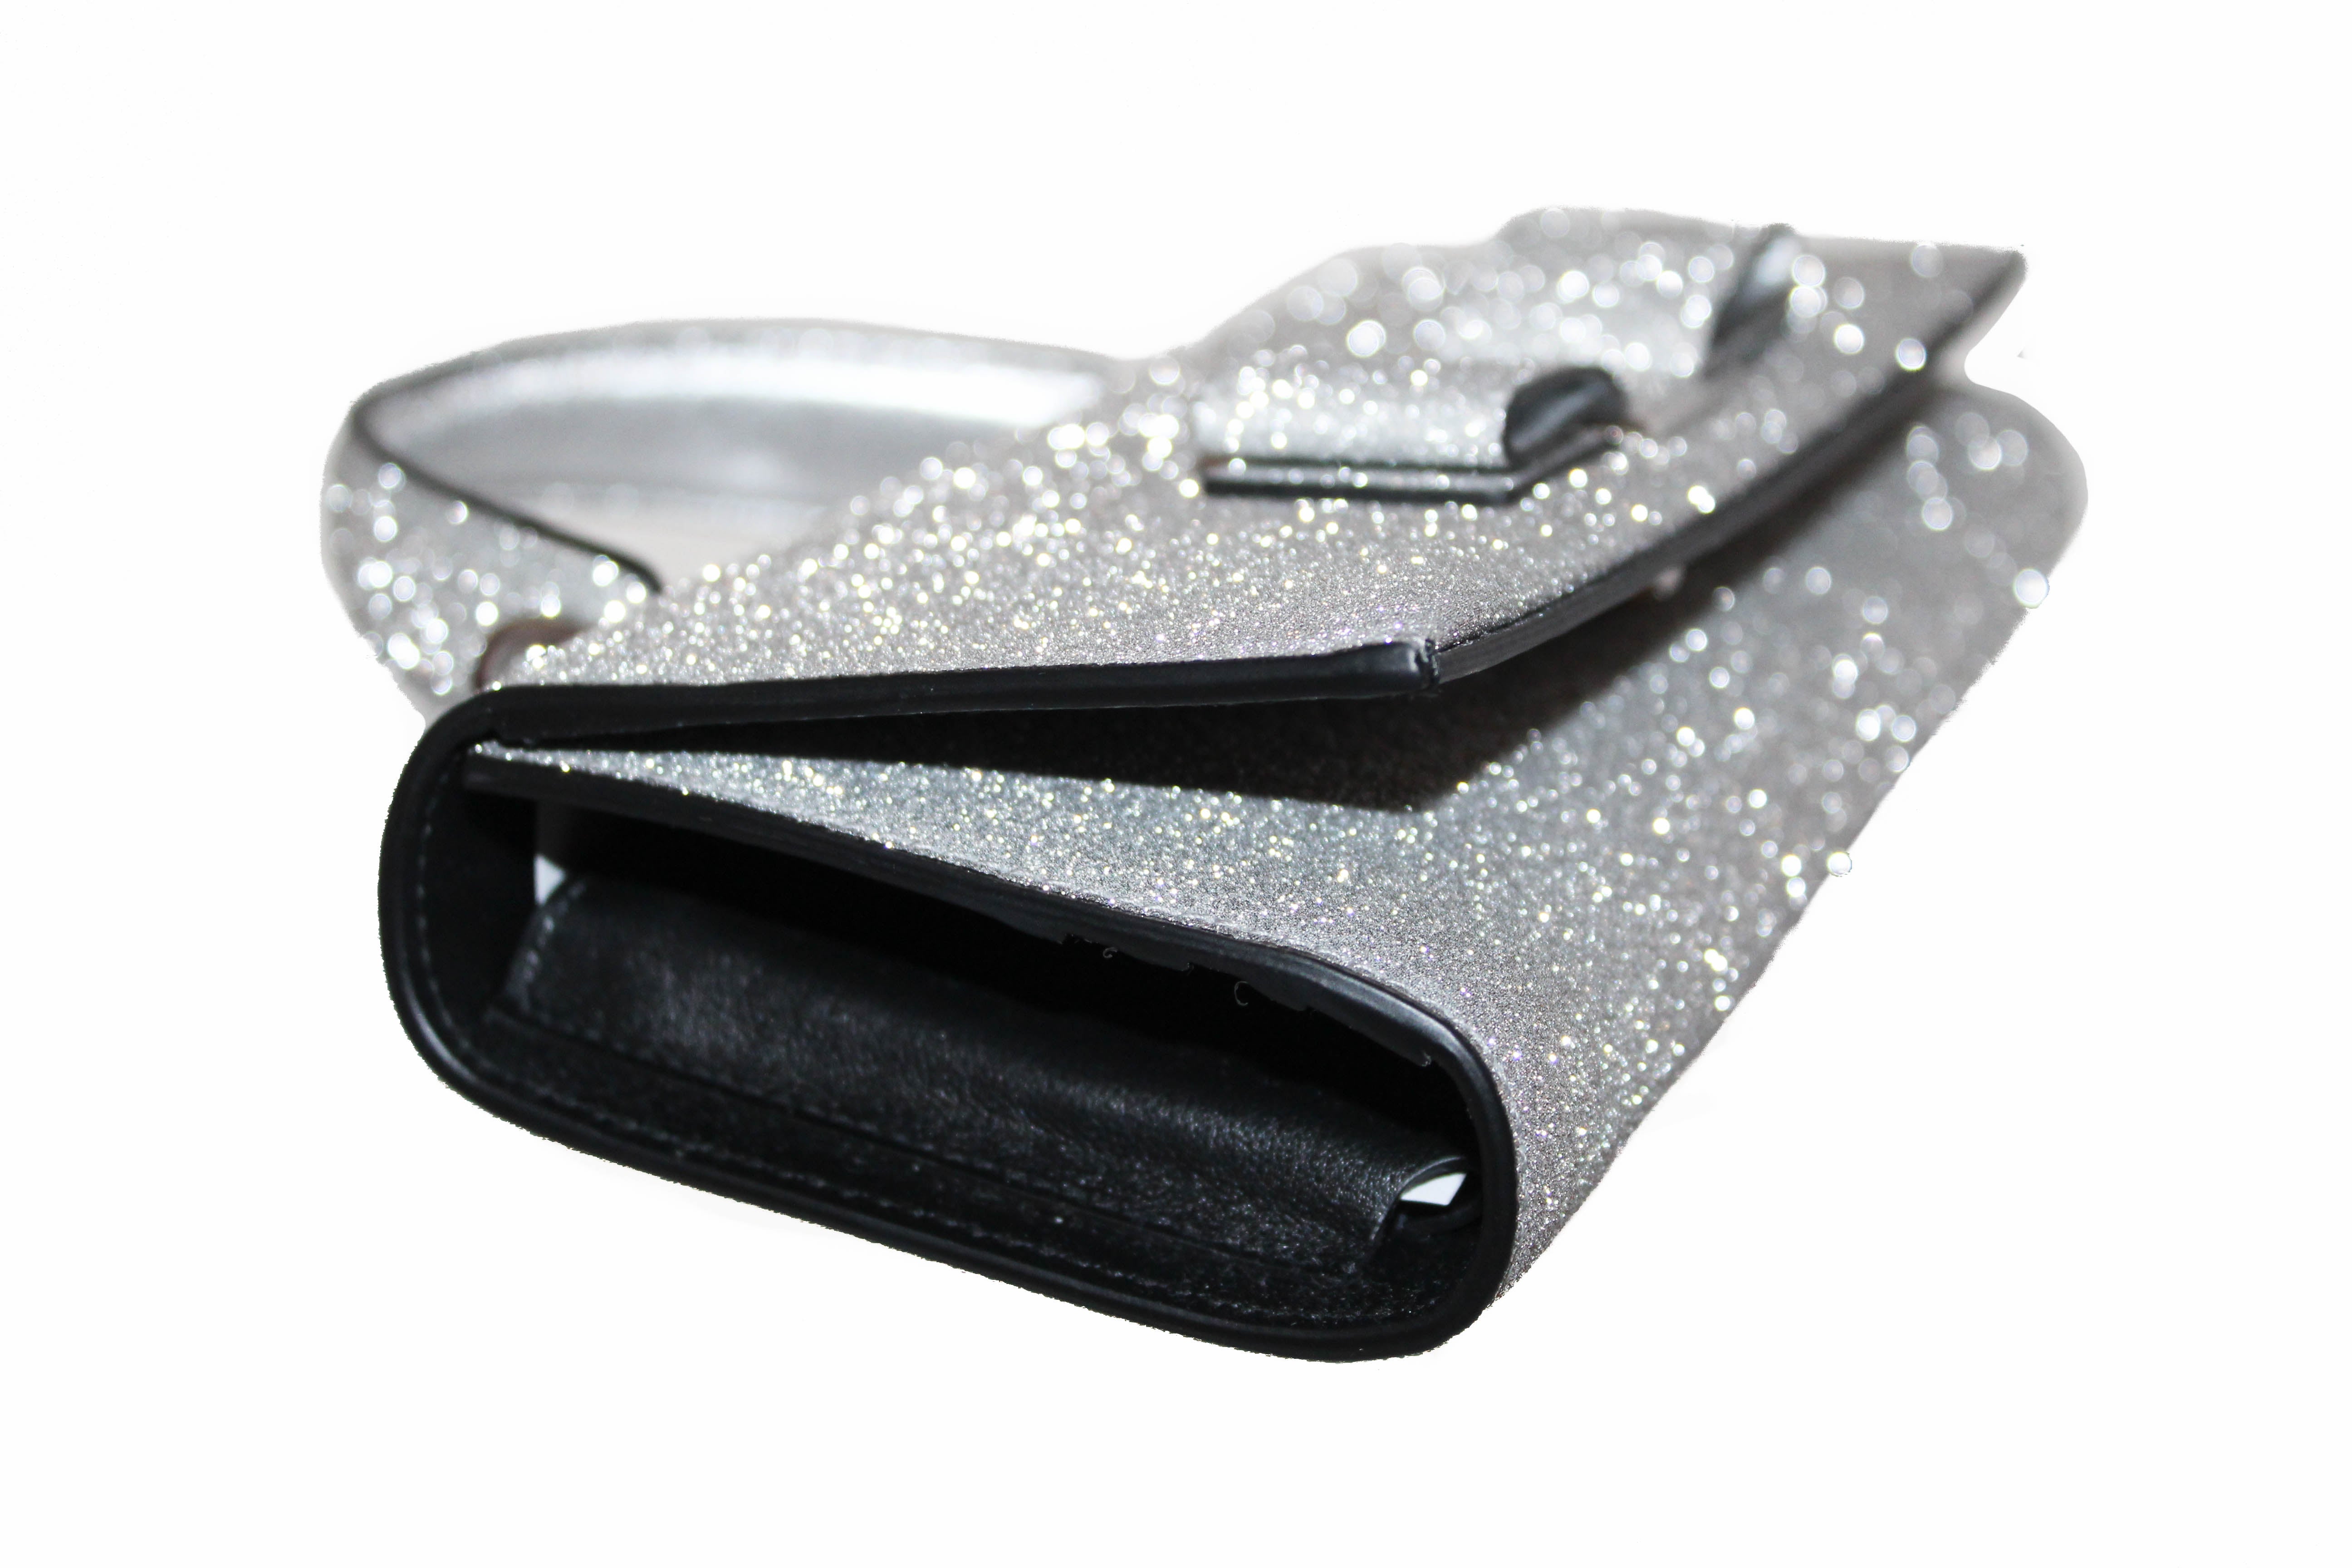 Authentic New Salvatore Ferragamo Metallic Silver Glitter Mini Vara Bow Top Handle Clutch